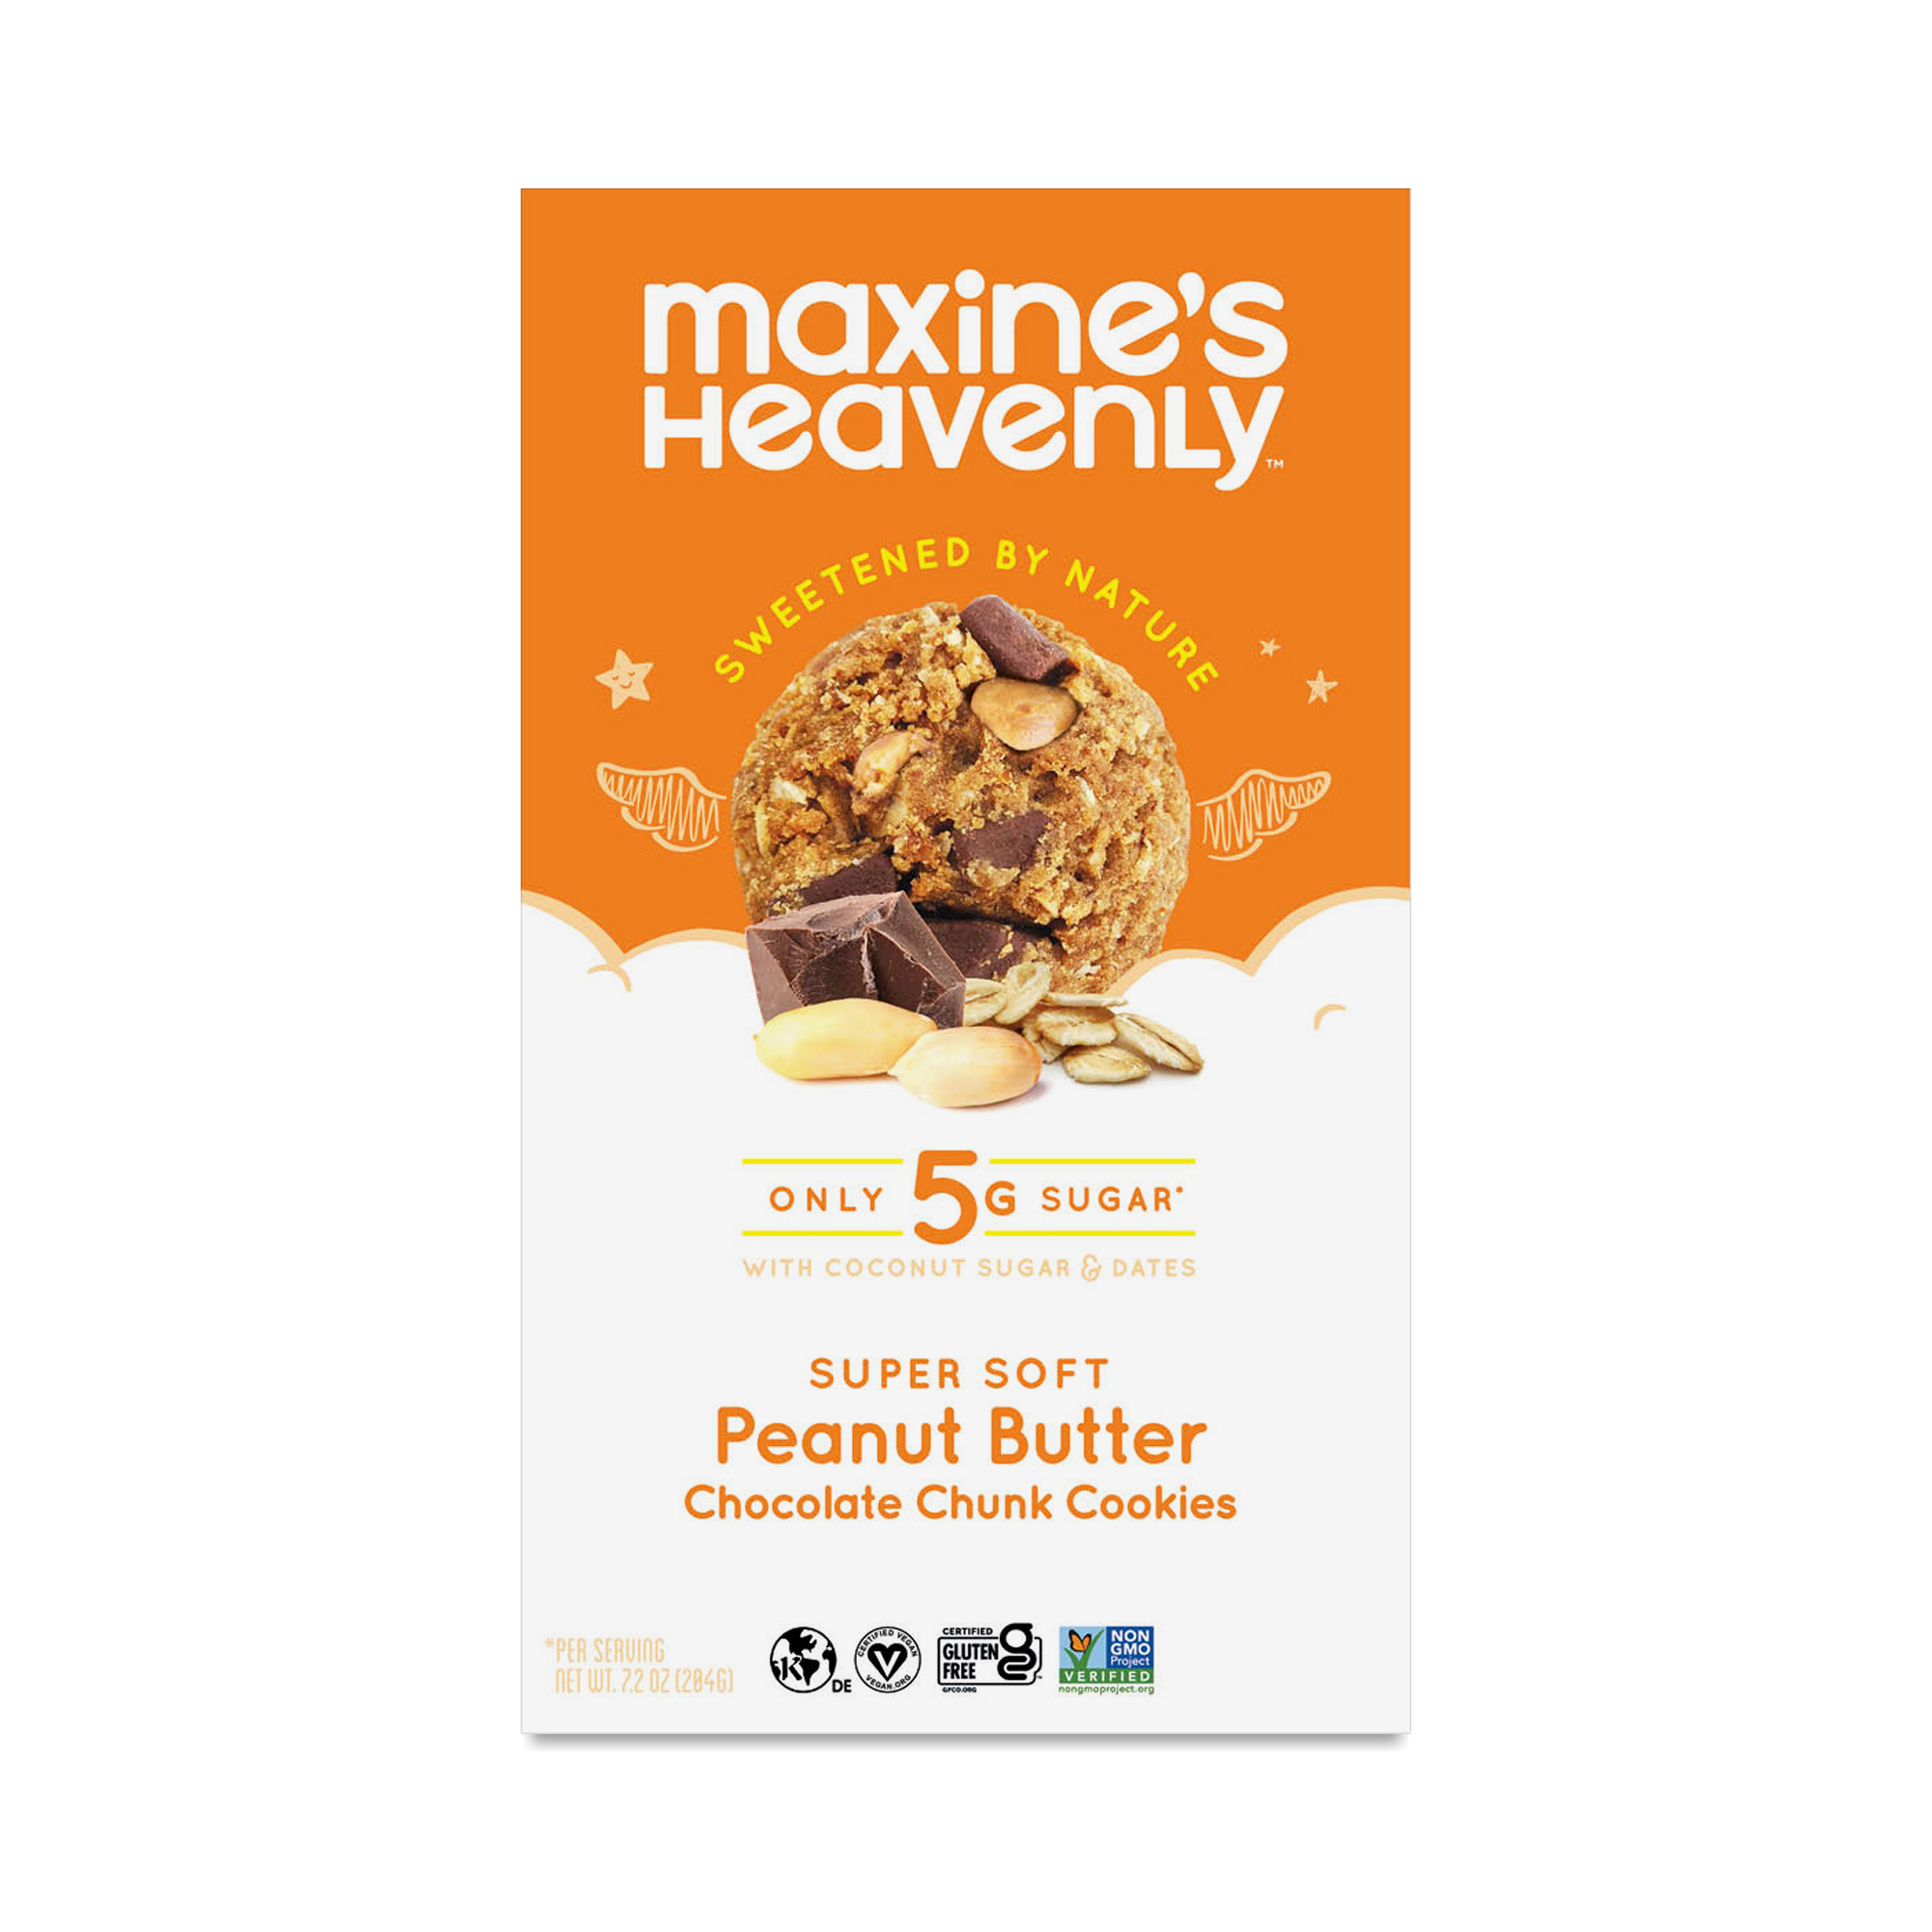 Maxine's Heavenly Peanut Butter Chocolate Chunk Cookies 7.2 oz box